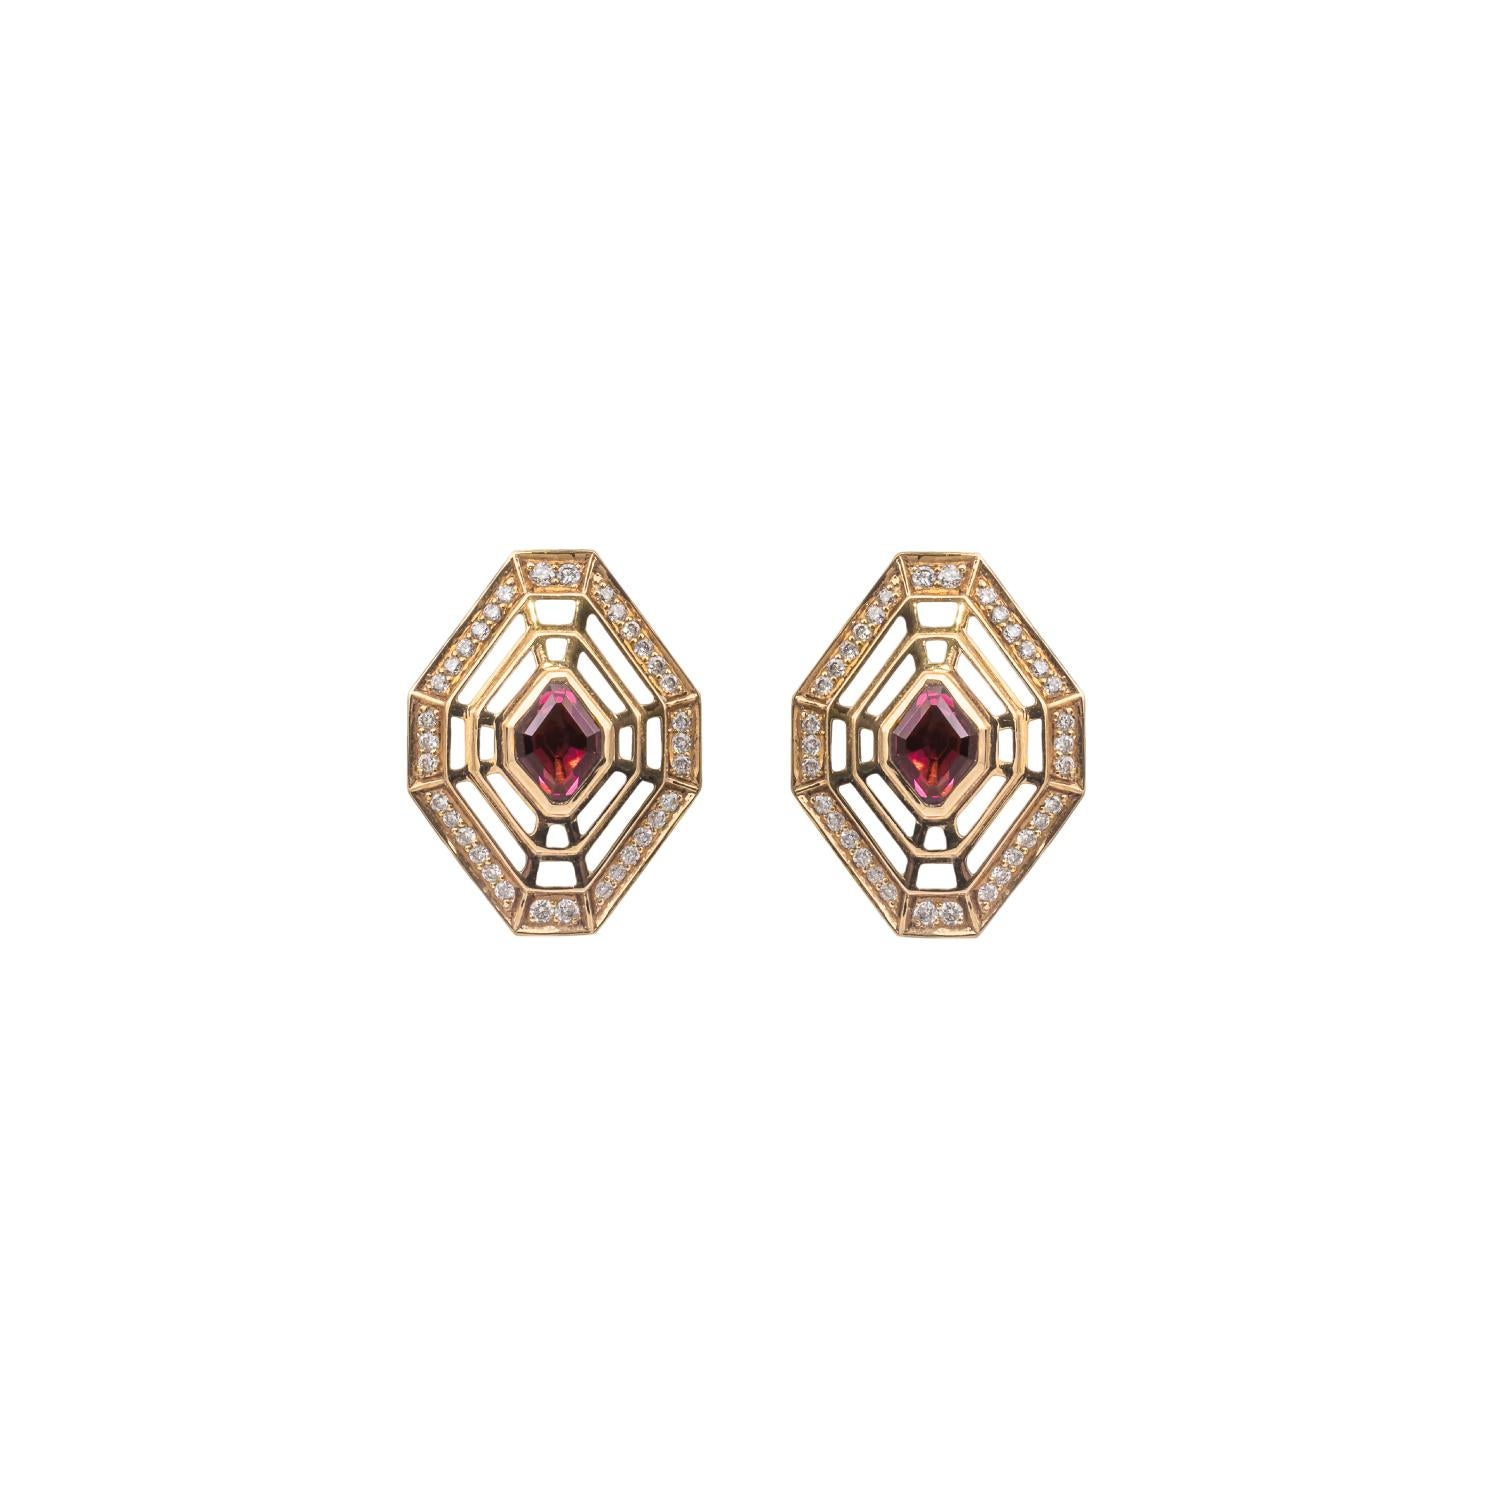 Rhodolite, Diamonds Earrings - 18kt Gold